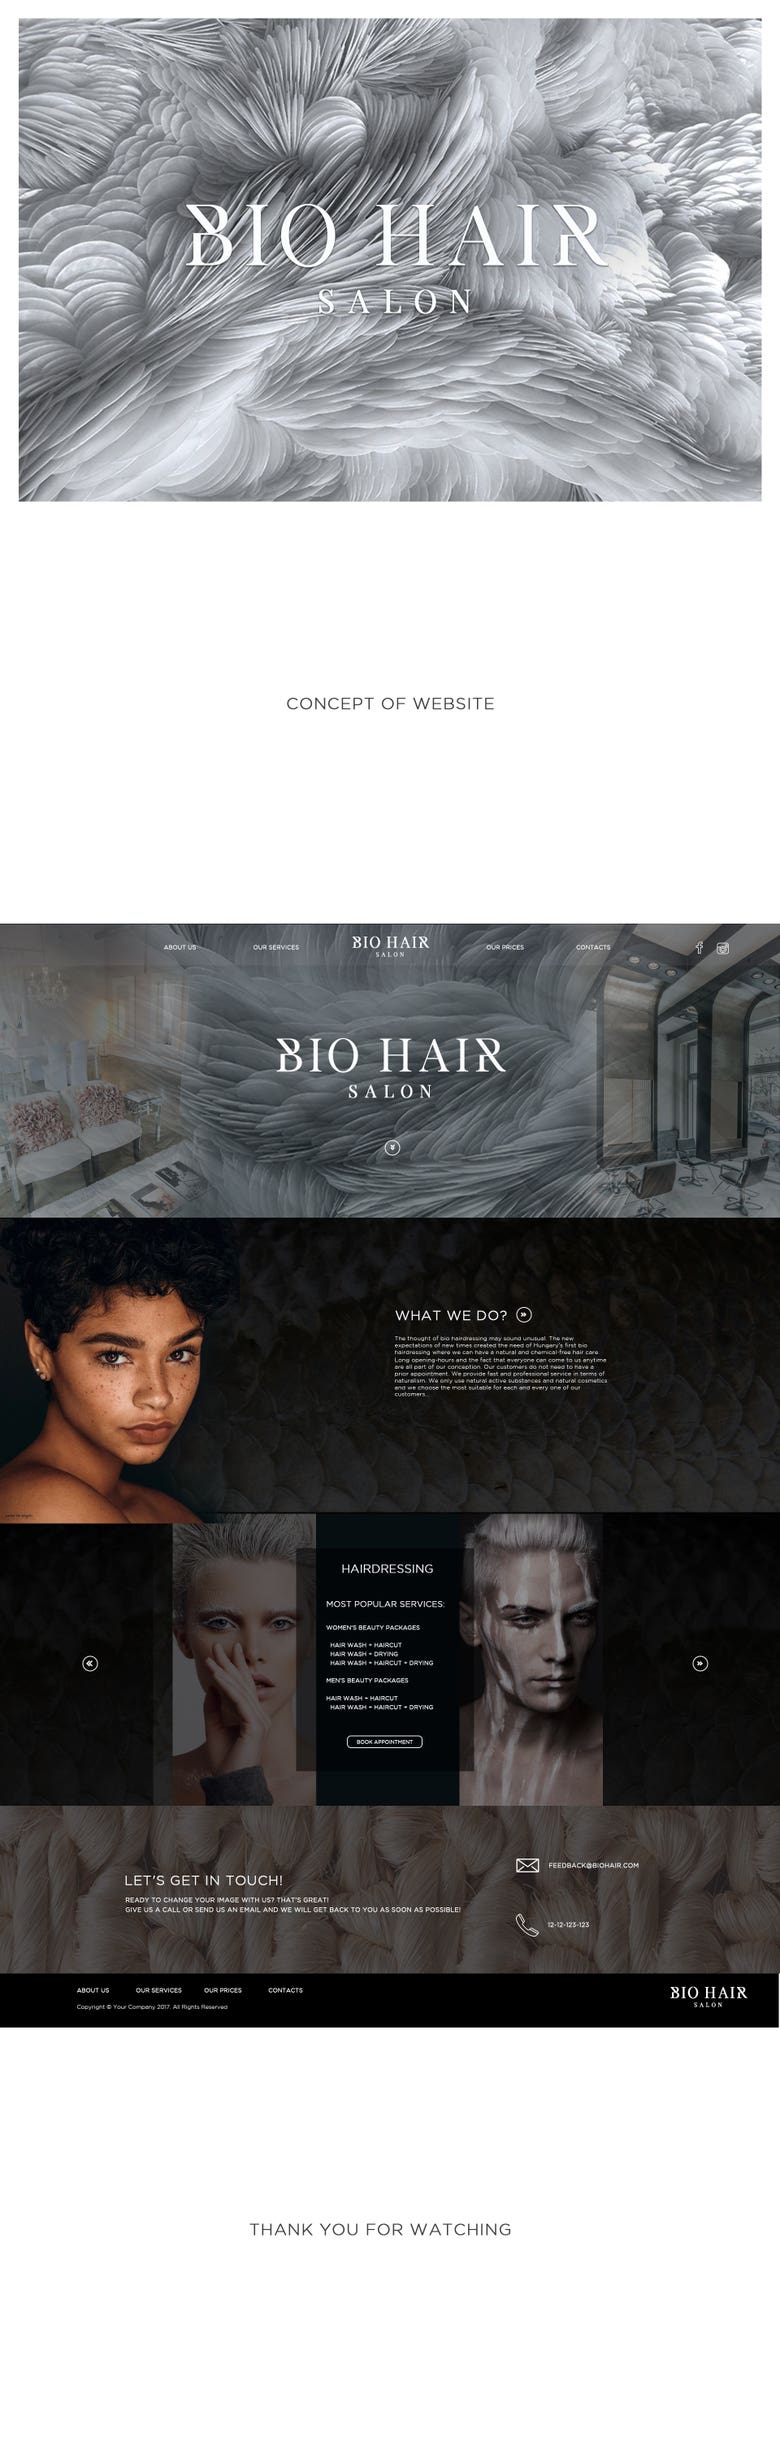 Hair salon Website